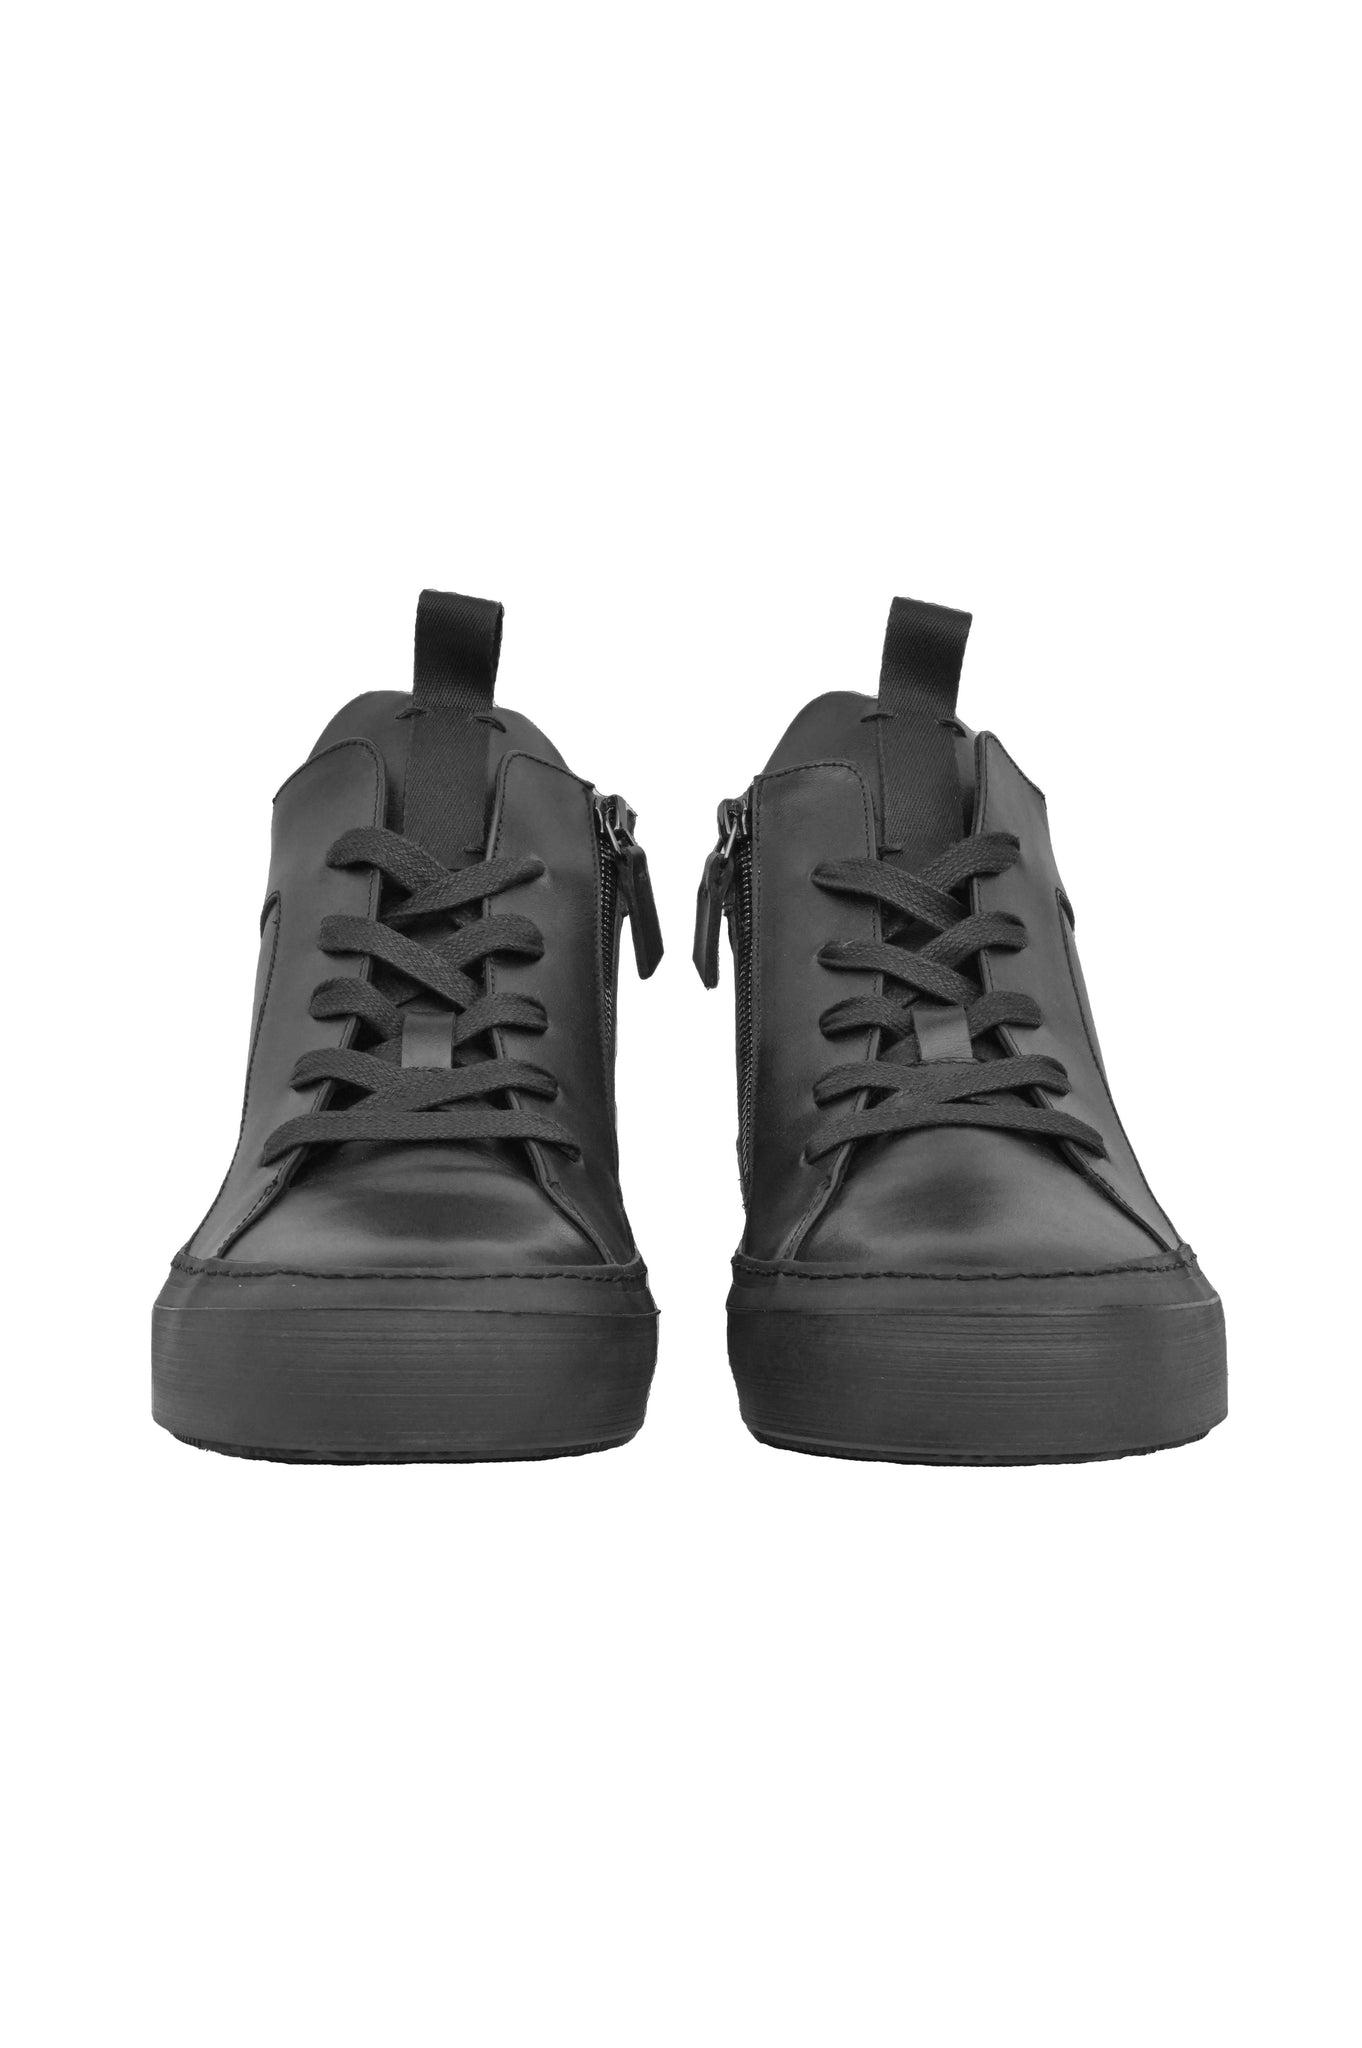 adddress-ST06 High Leather Sneaker